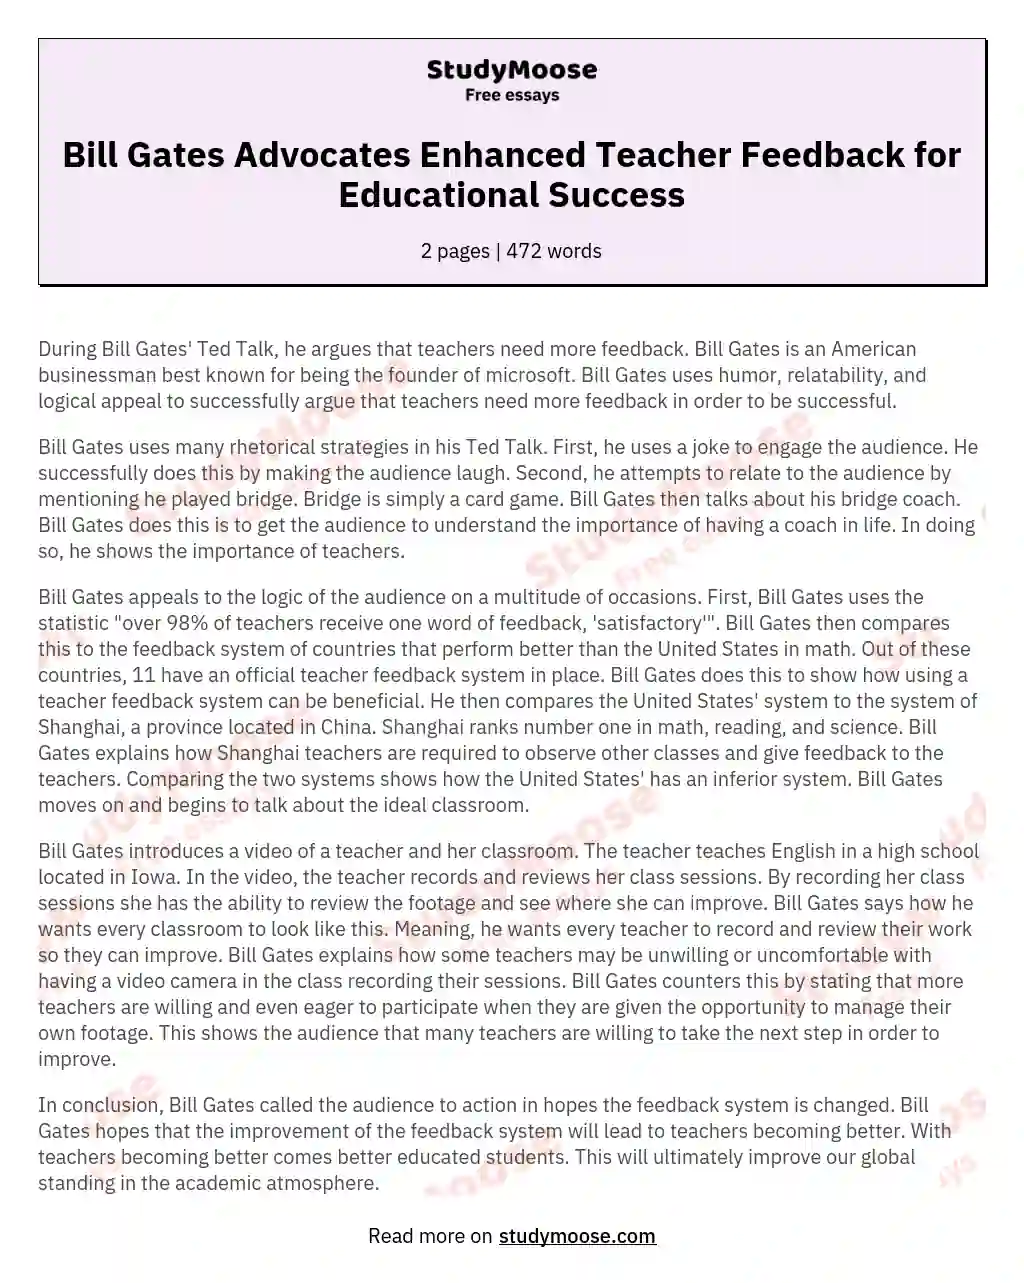 Bill Gates Advocates Enhanced Teacher Feedback for Educational Success essay